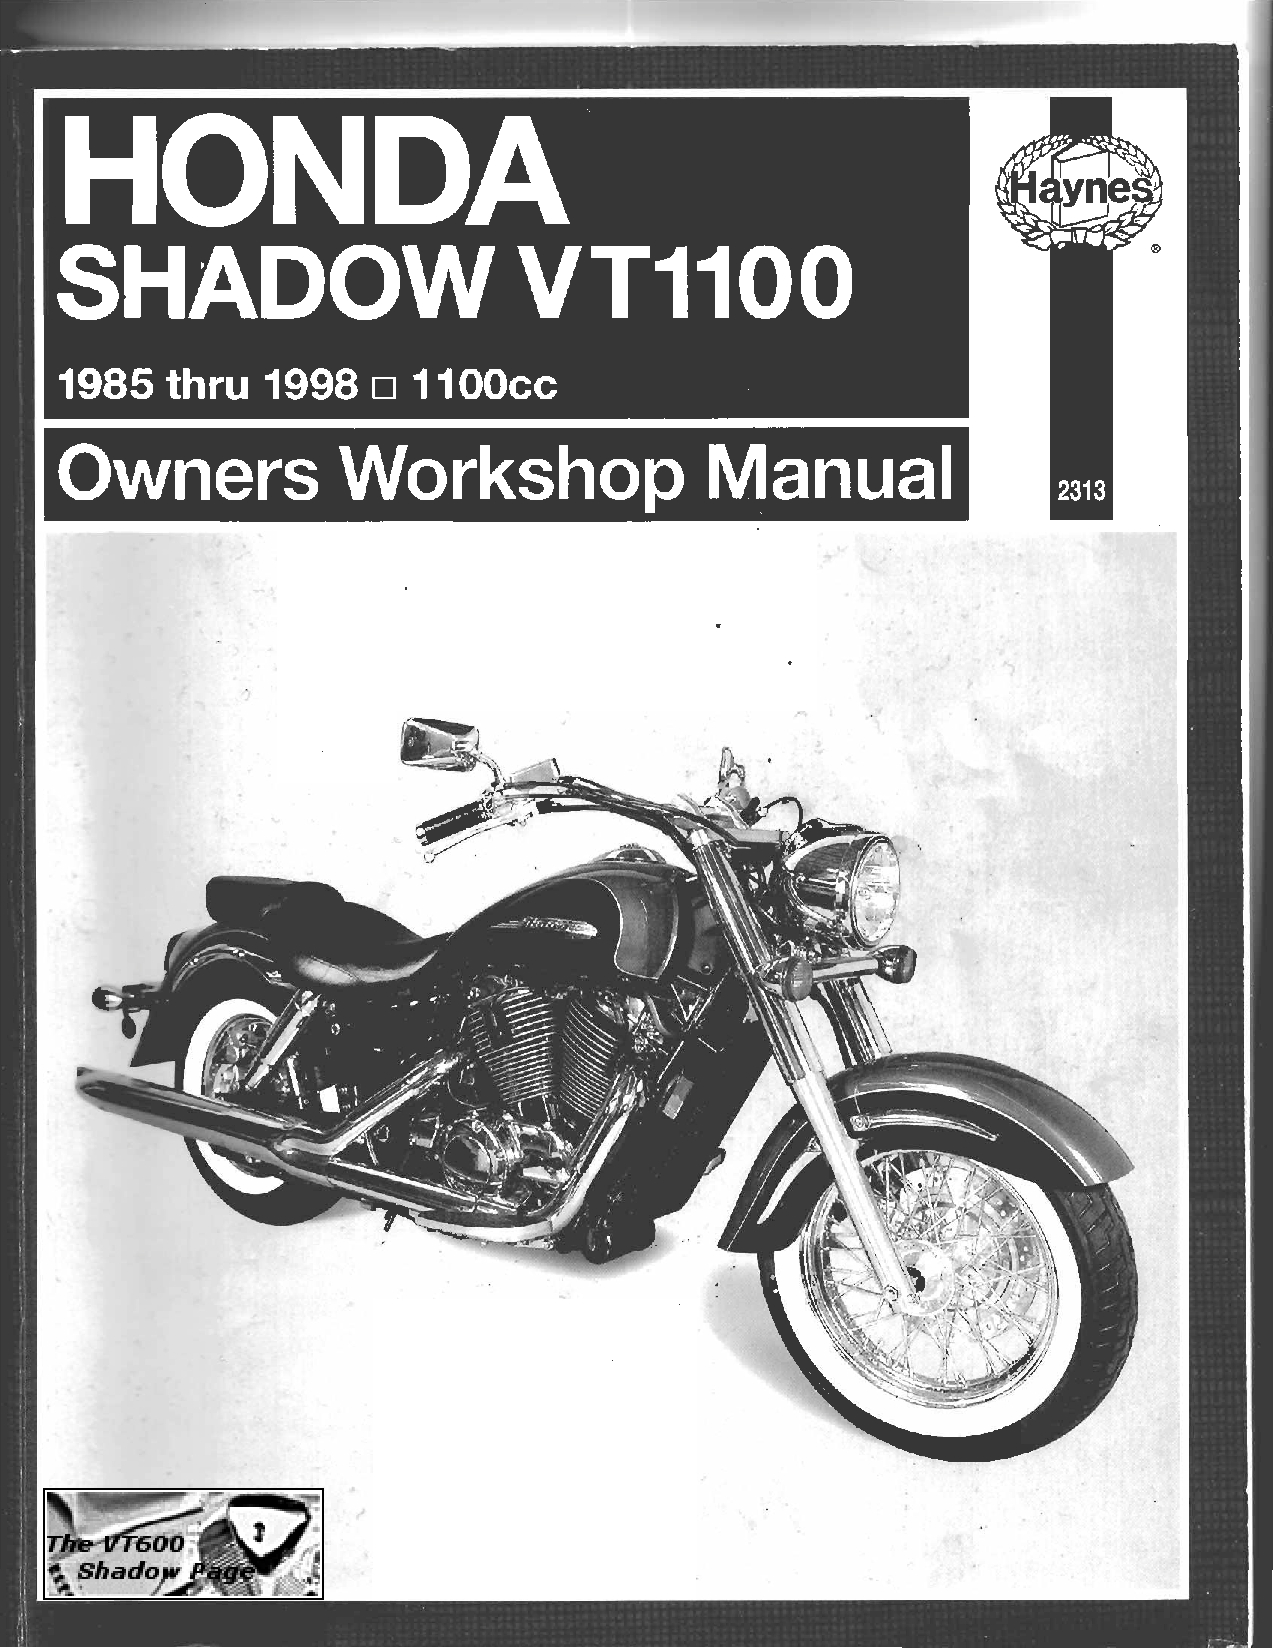 haynes workshop manuals pdf free download